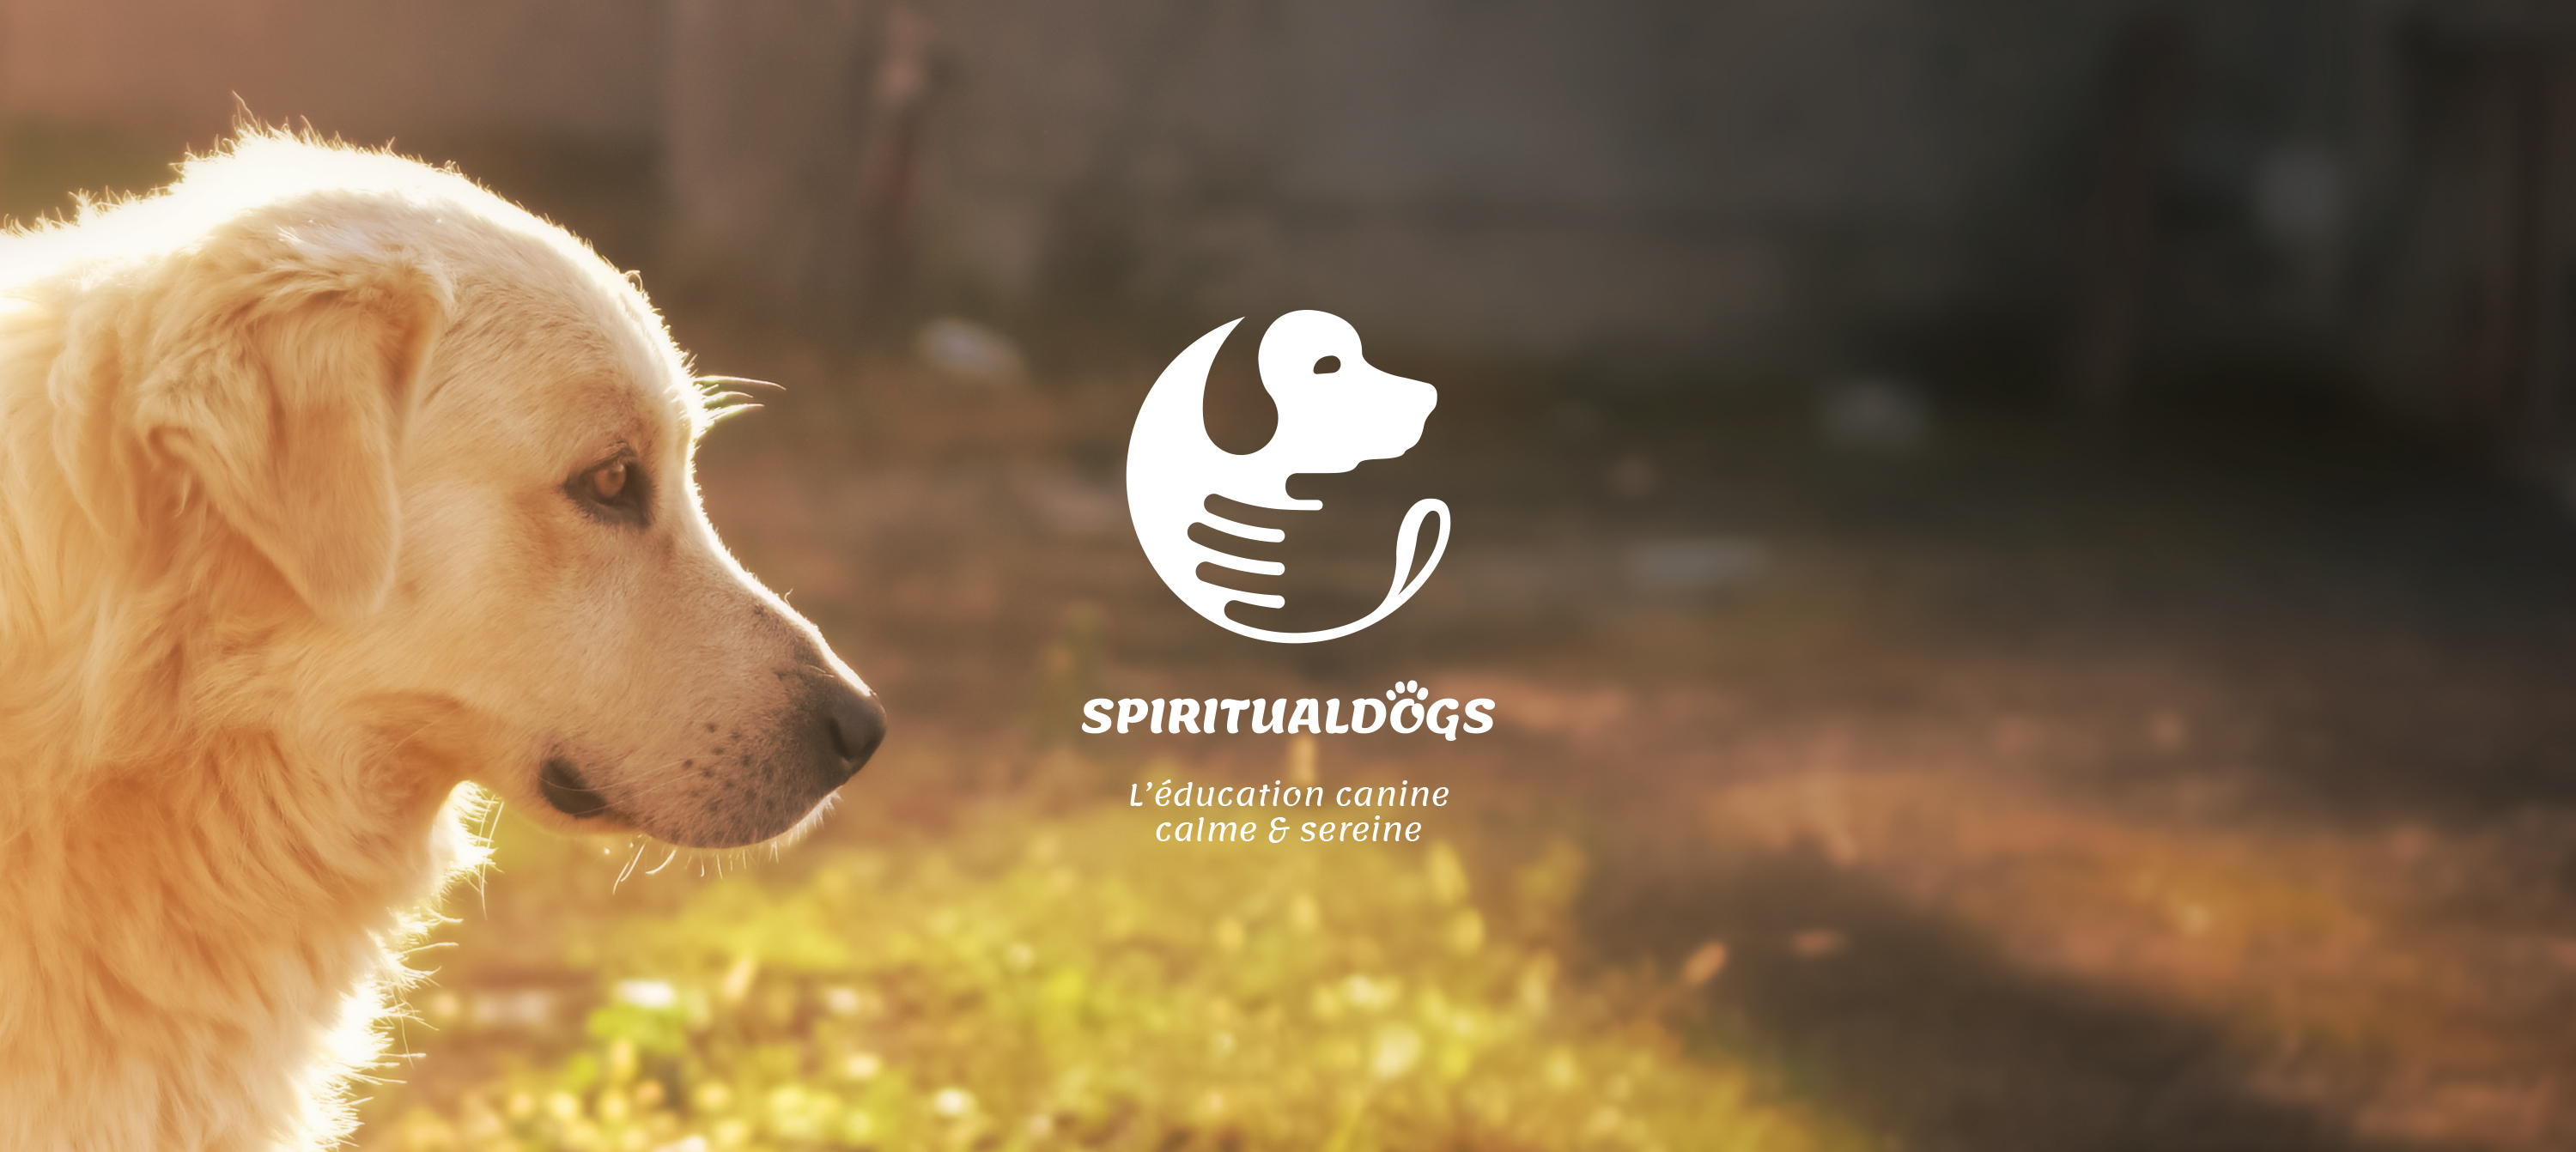 Spiritualdogs